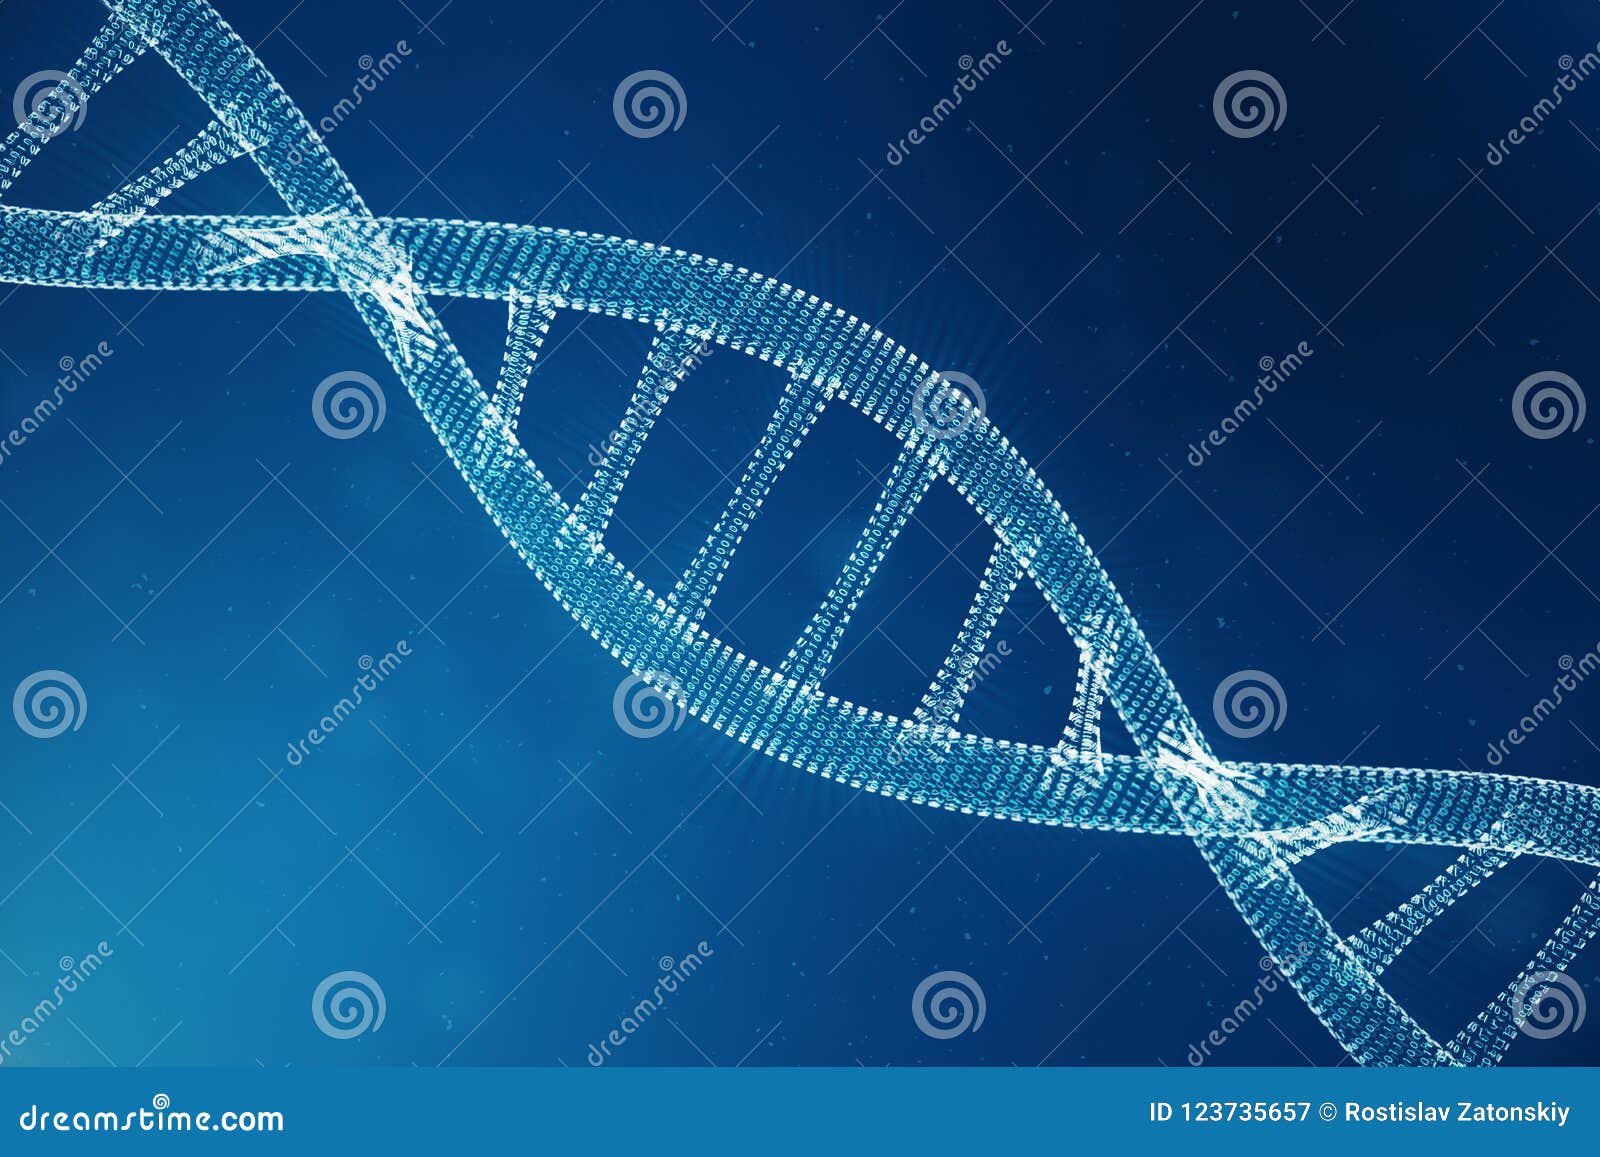 digital dna molecule, structure. concept binary code human genome. dna molecule with modified genes. 3d 